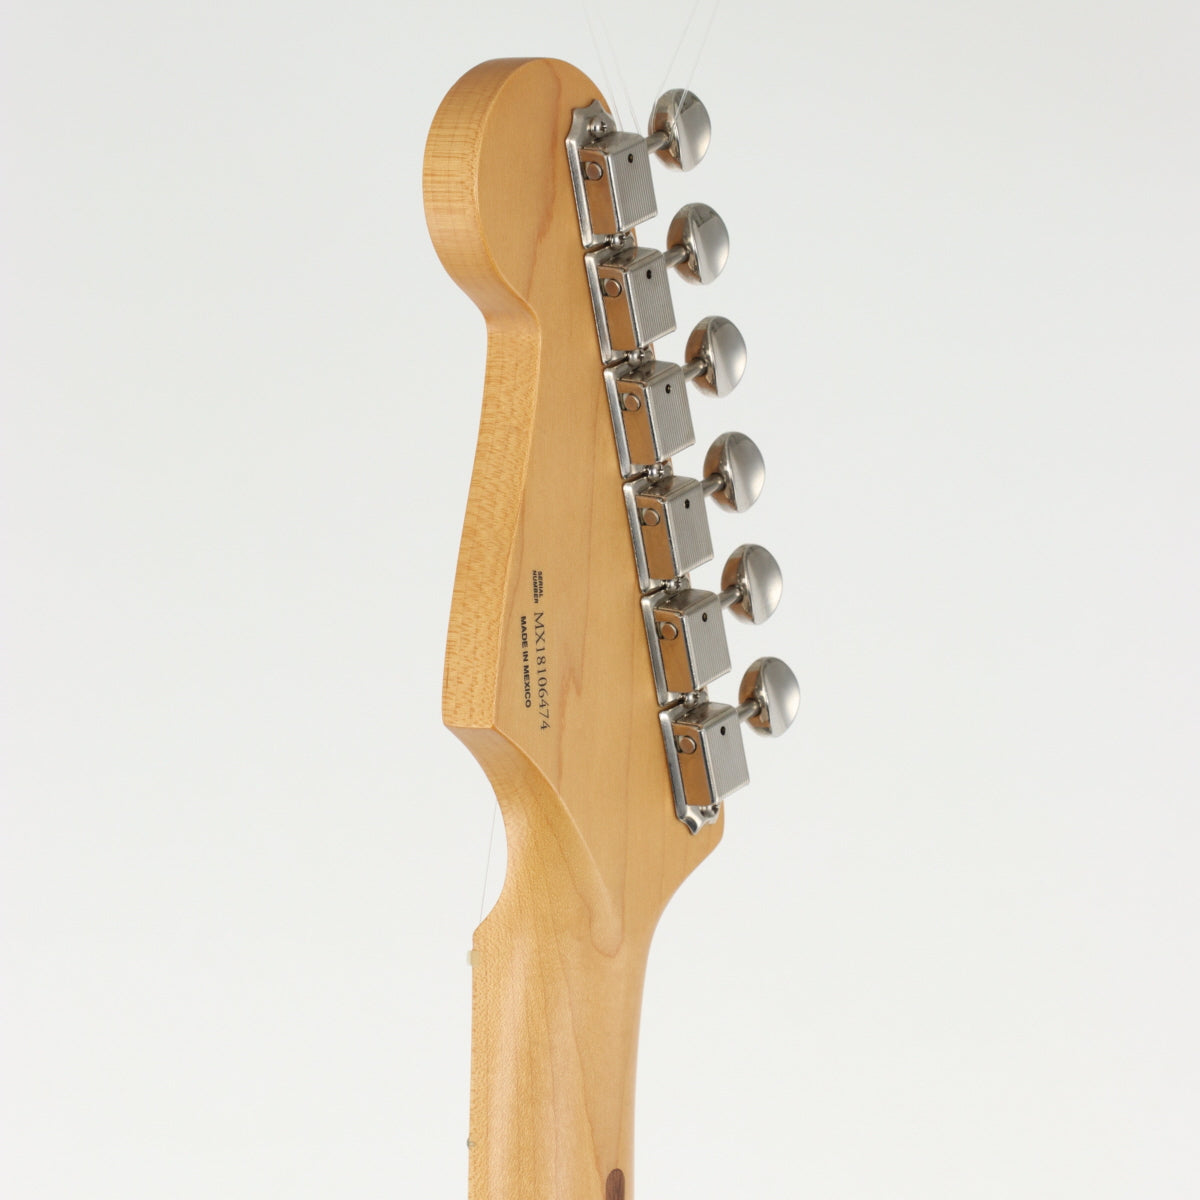 [SN MX18106474] USED Fender Mexico Fender Mexico / EOB Stratocaster Olympic White [20]